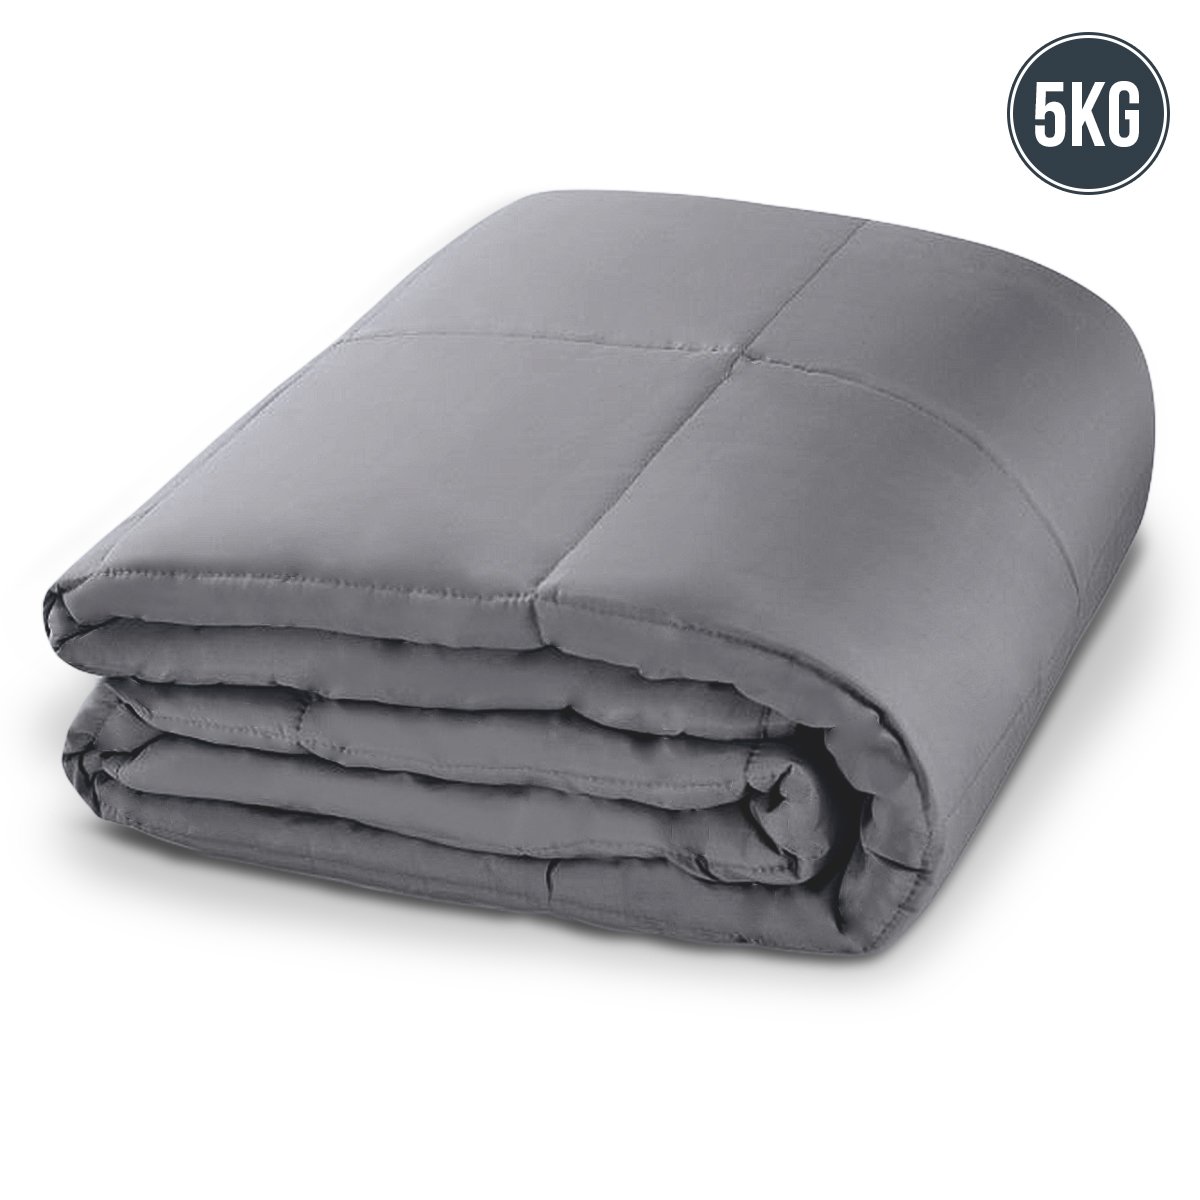 Laura Hill Weighted Blanket Heavy Quilt Doona 5Kg - Grey 2